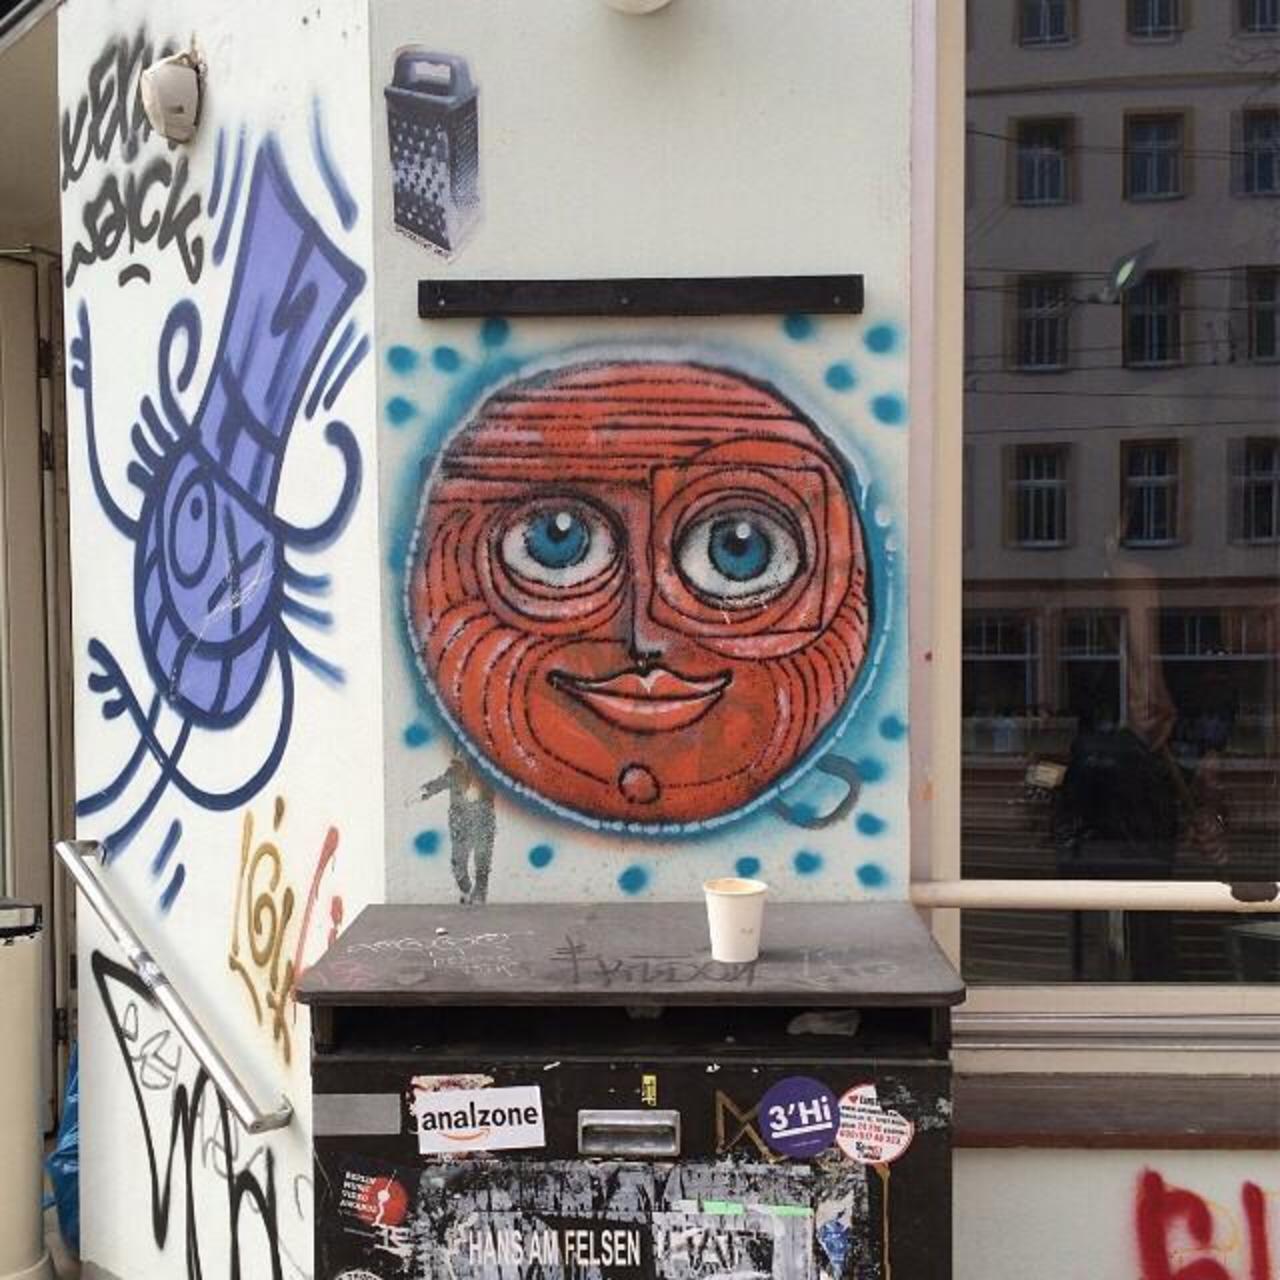 #Berlin #Allemagne #streetart #street #art #urbanart #urbantag #graffiti #streetartberlin by becombegeek http://t.co/CgcDMUJHWT